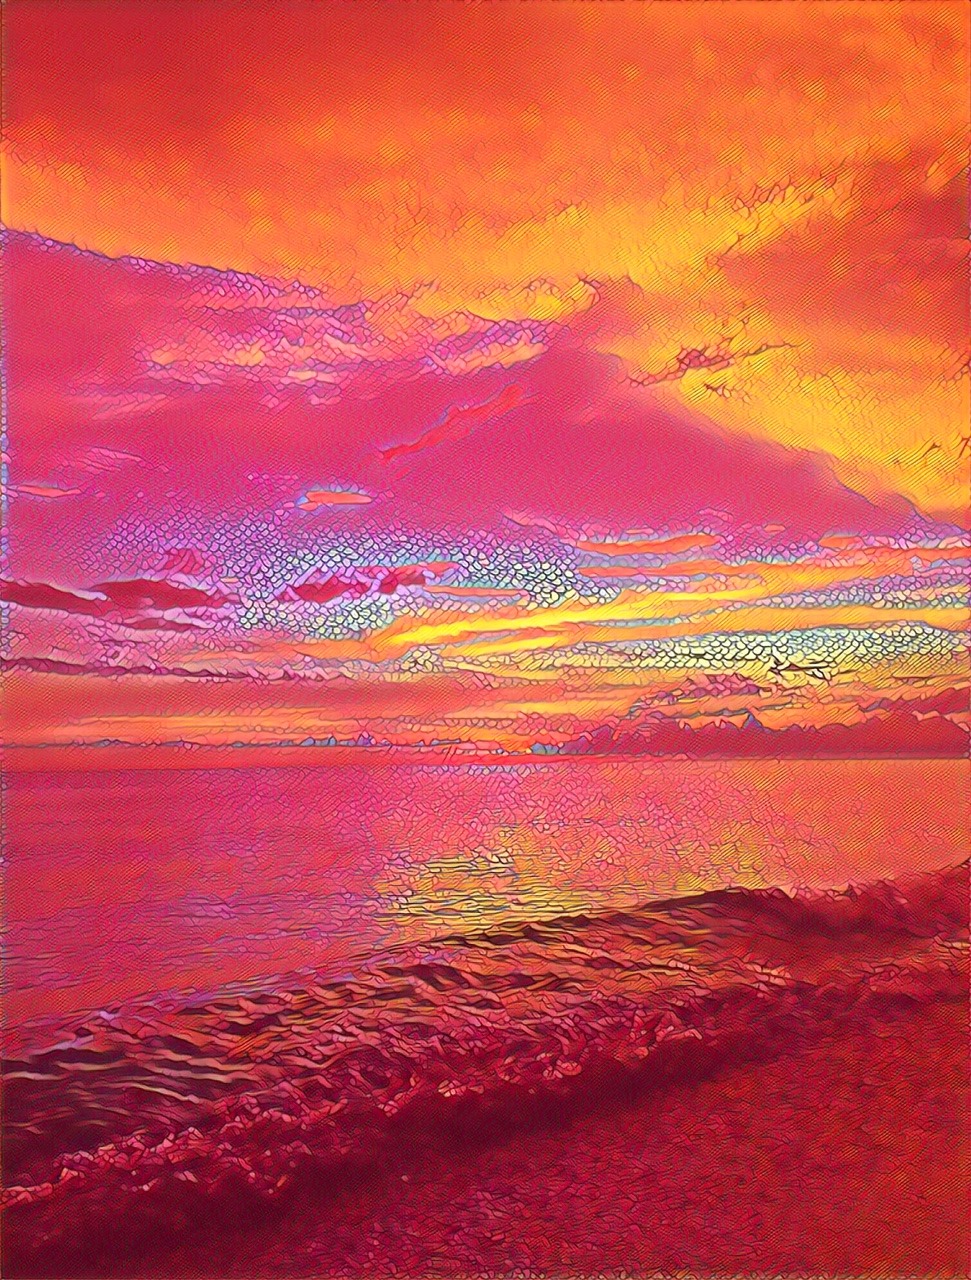 Trippy image of a vibrant, colorful, beach scene